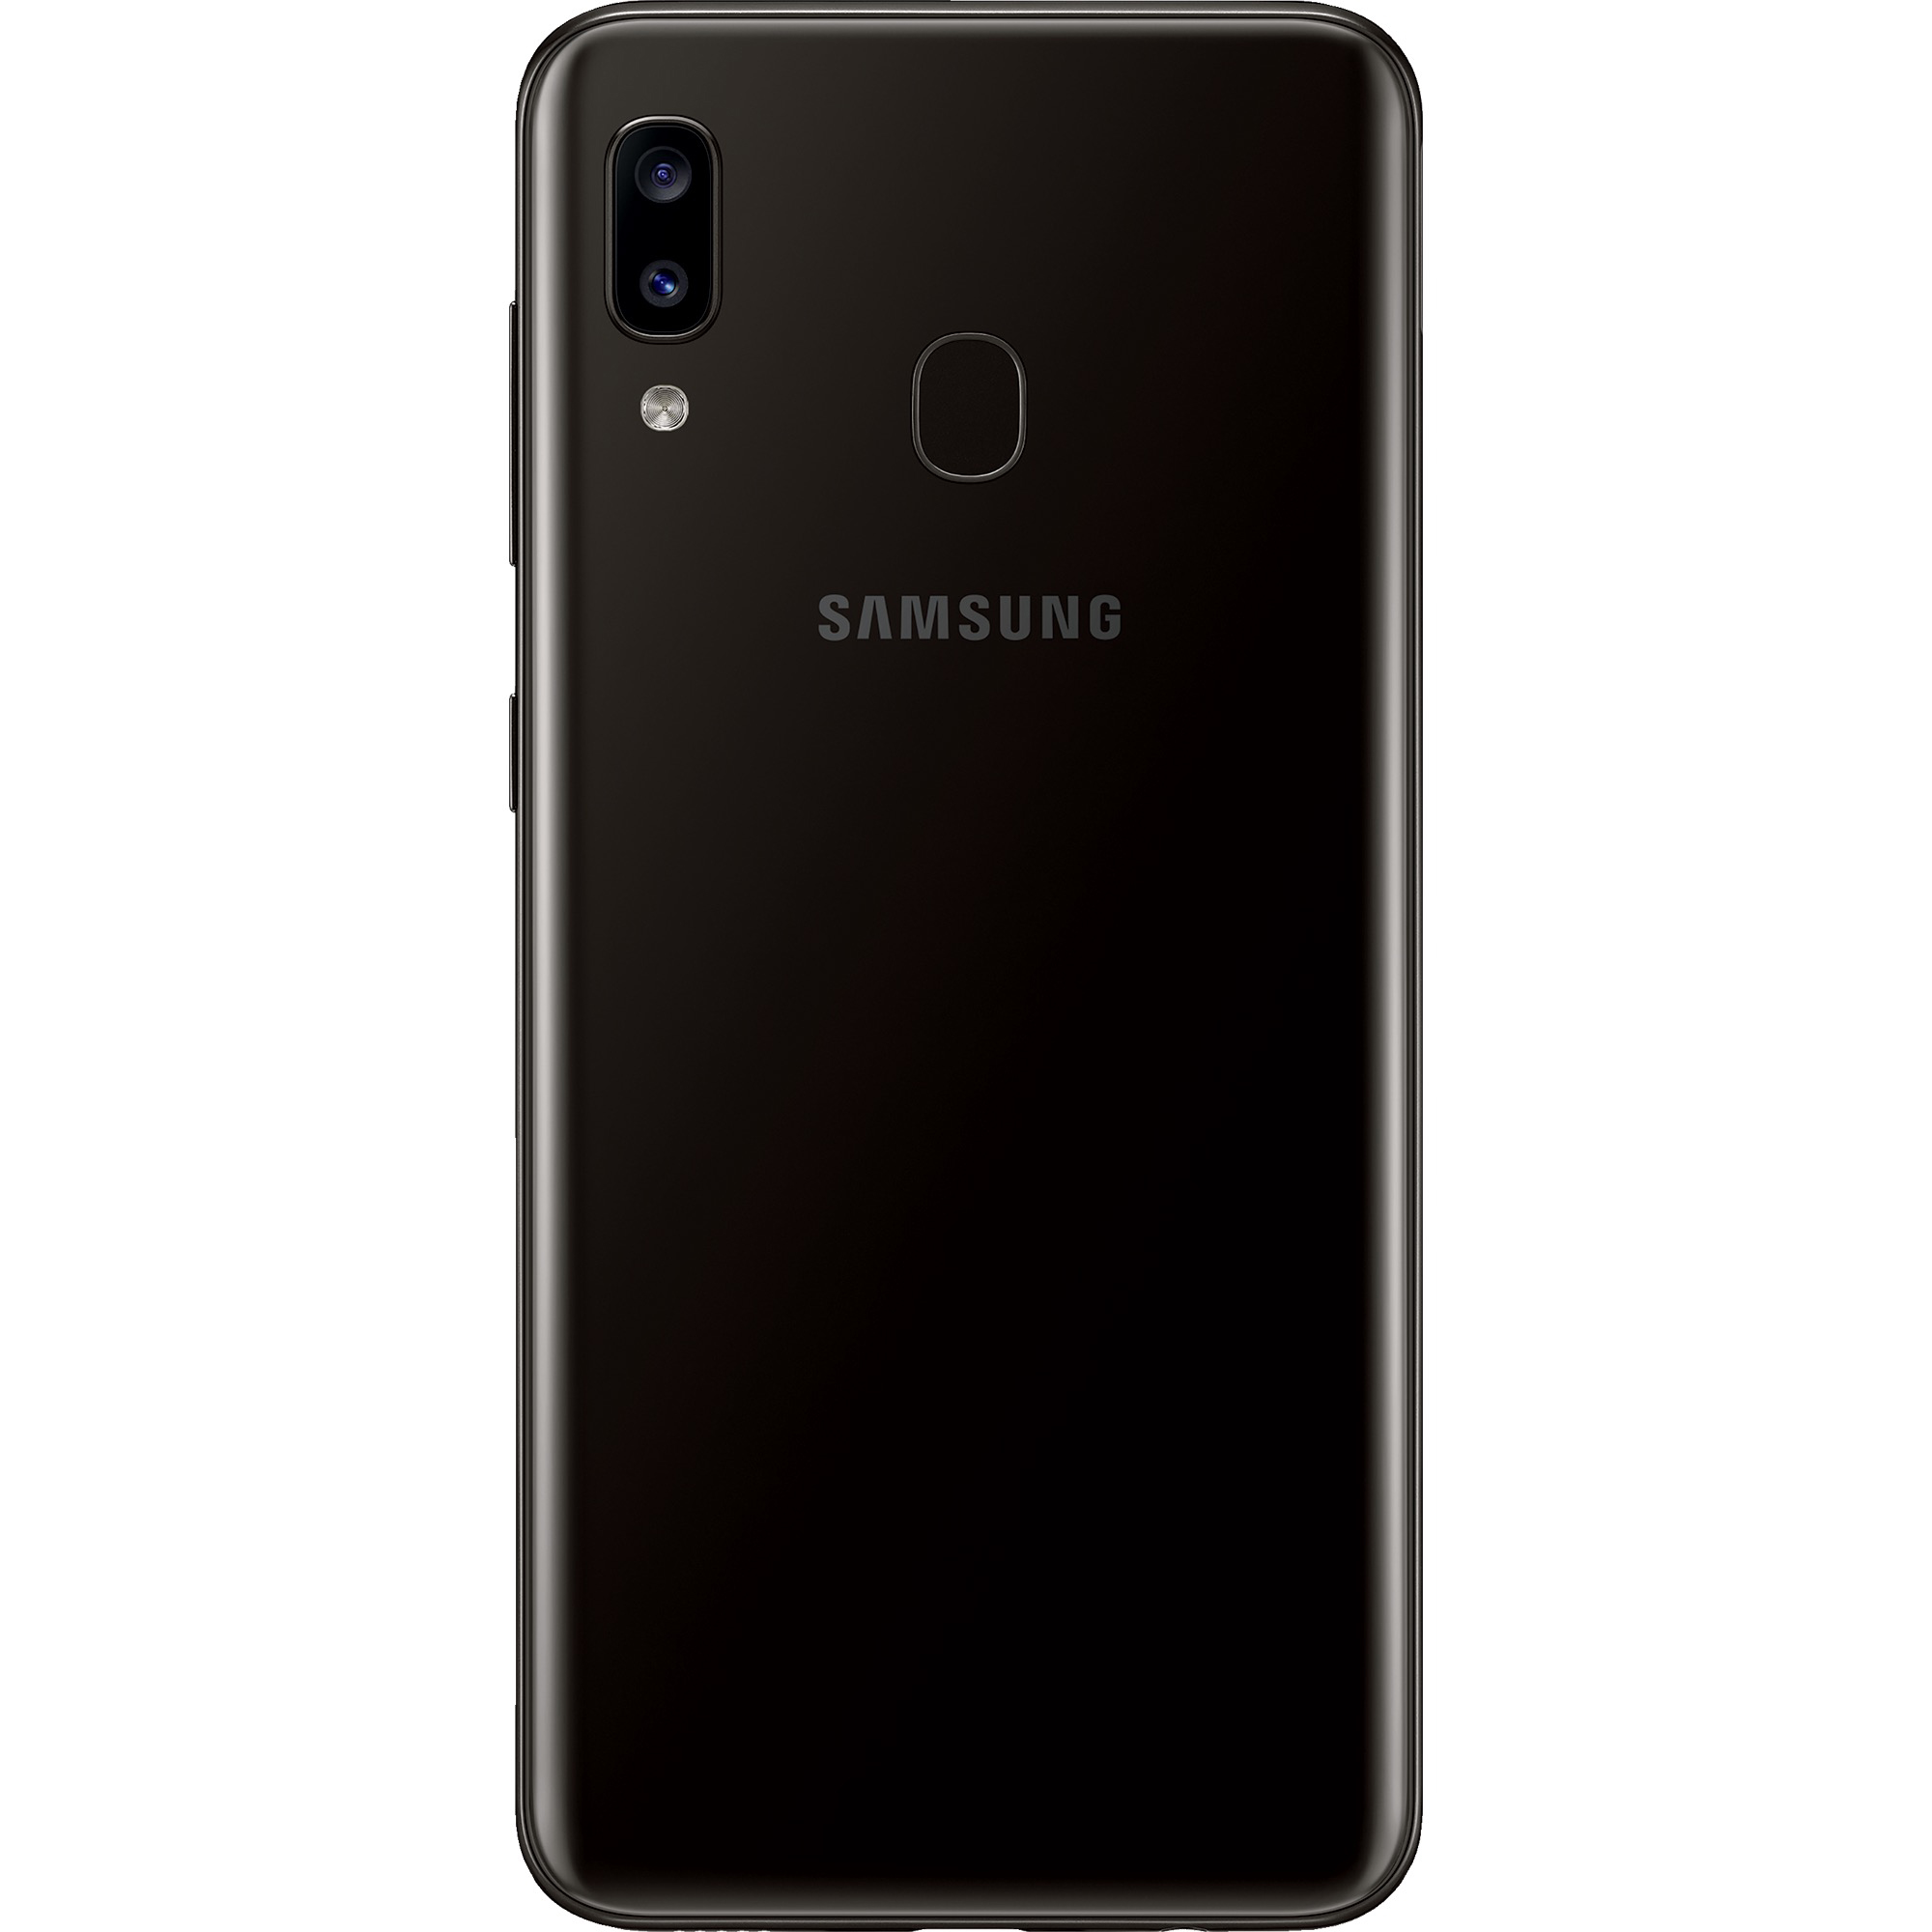 Samsung Straight Talk Galaxy A20, 32 GB Black - Prepaid Smartphone - image 4 of 11